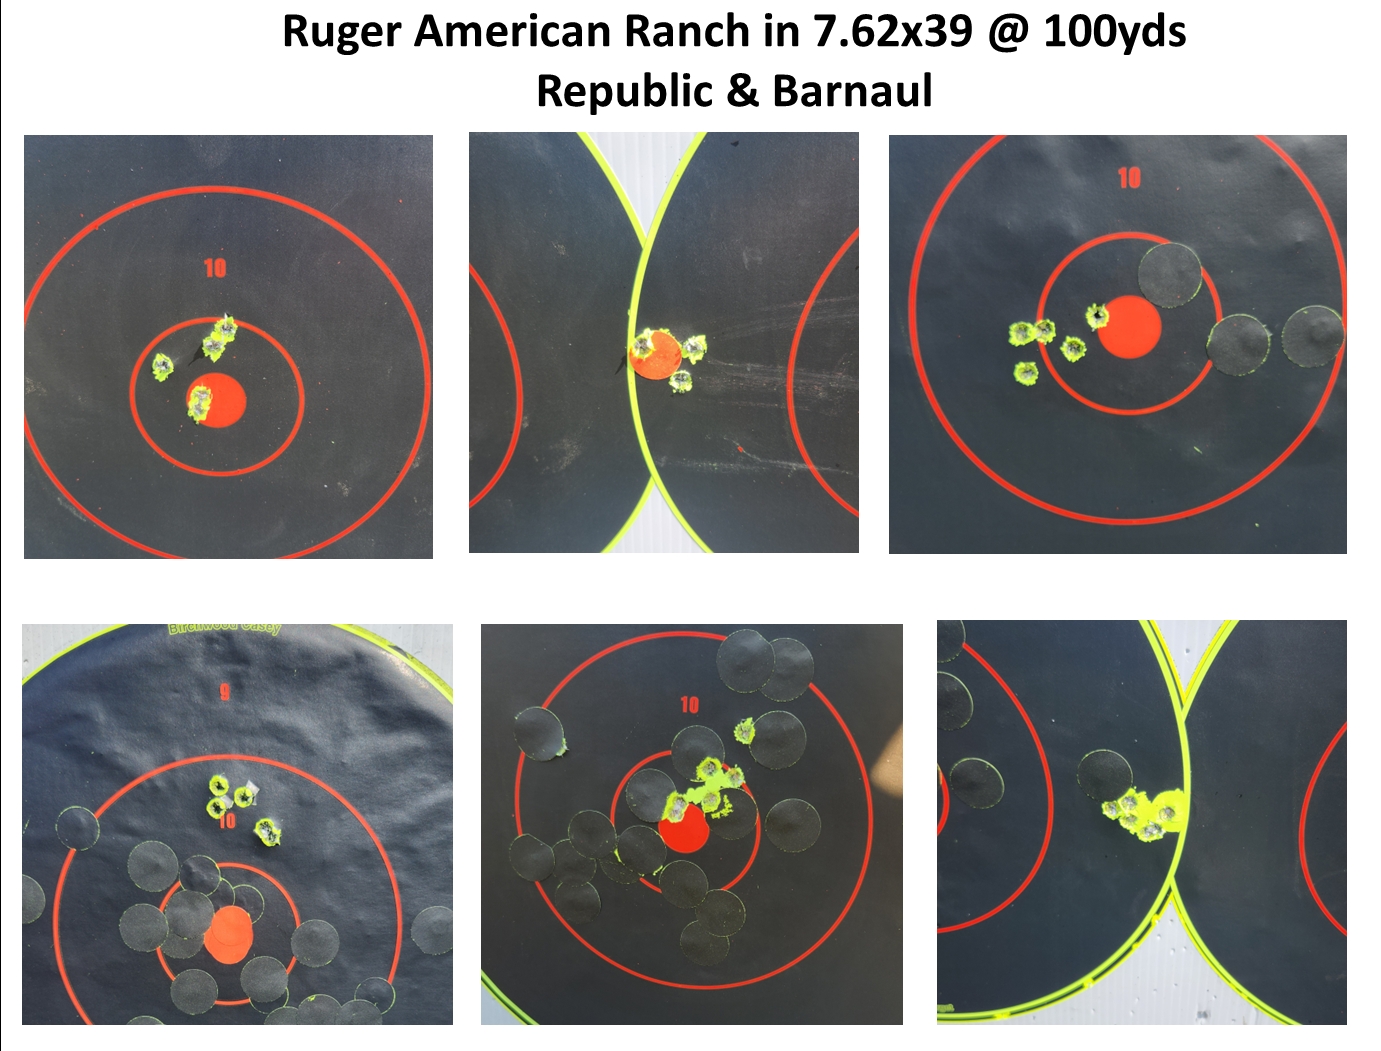 Ruger American Ranch 100yds Republic-Barnaul 1st Day.jpg